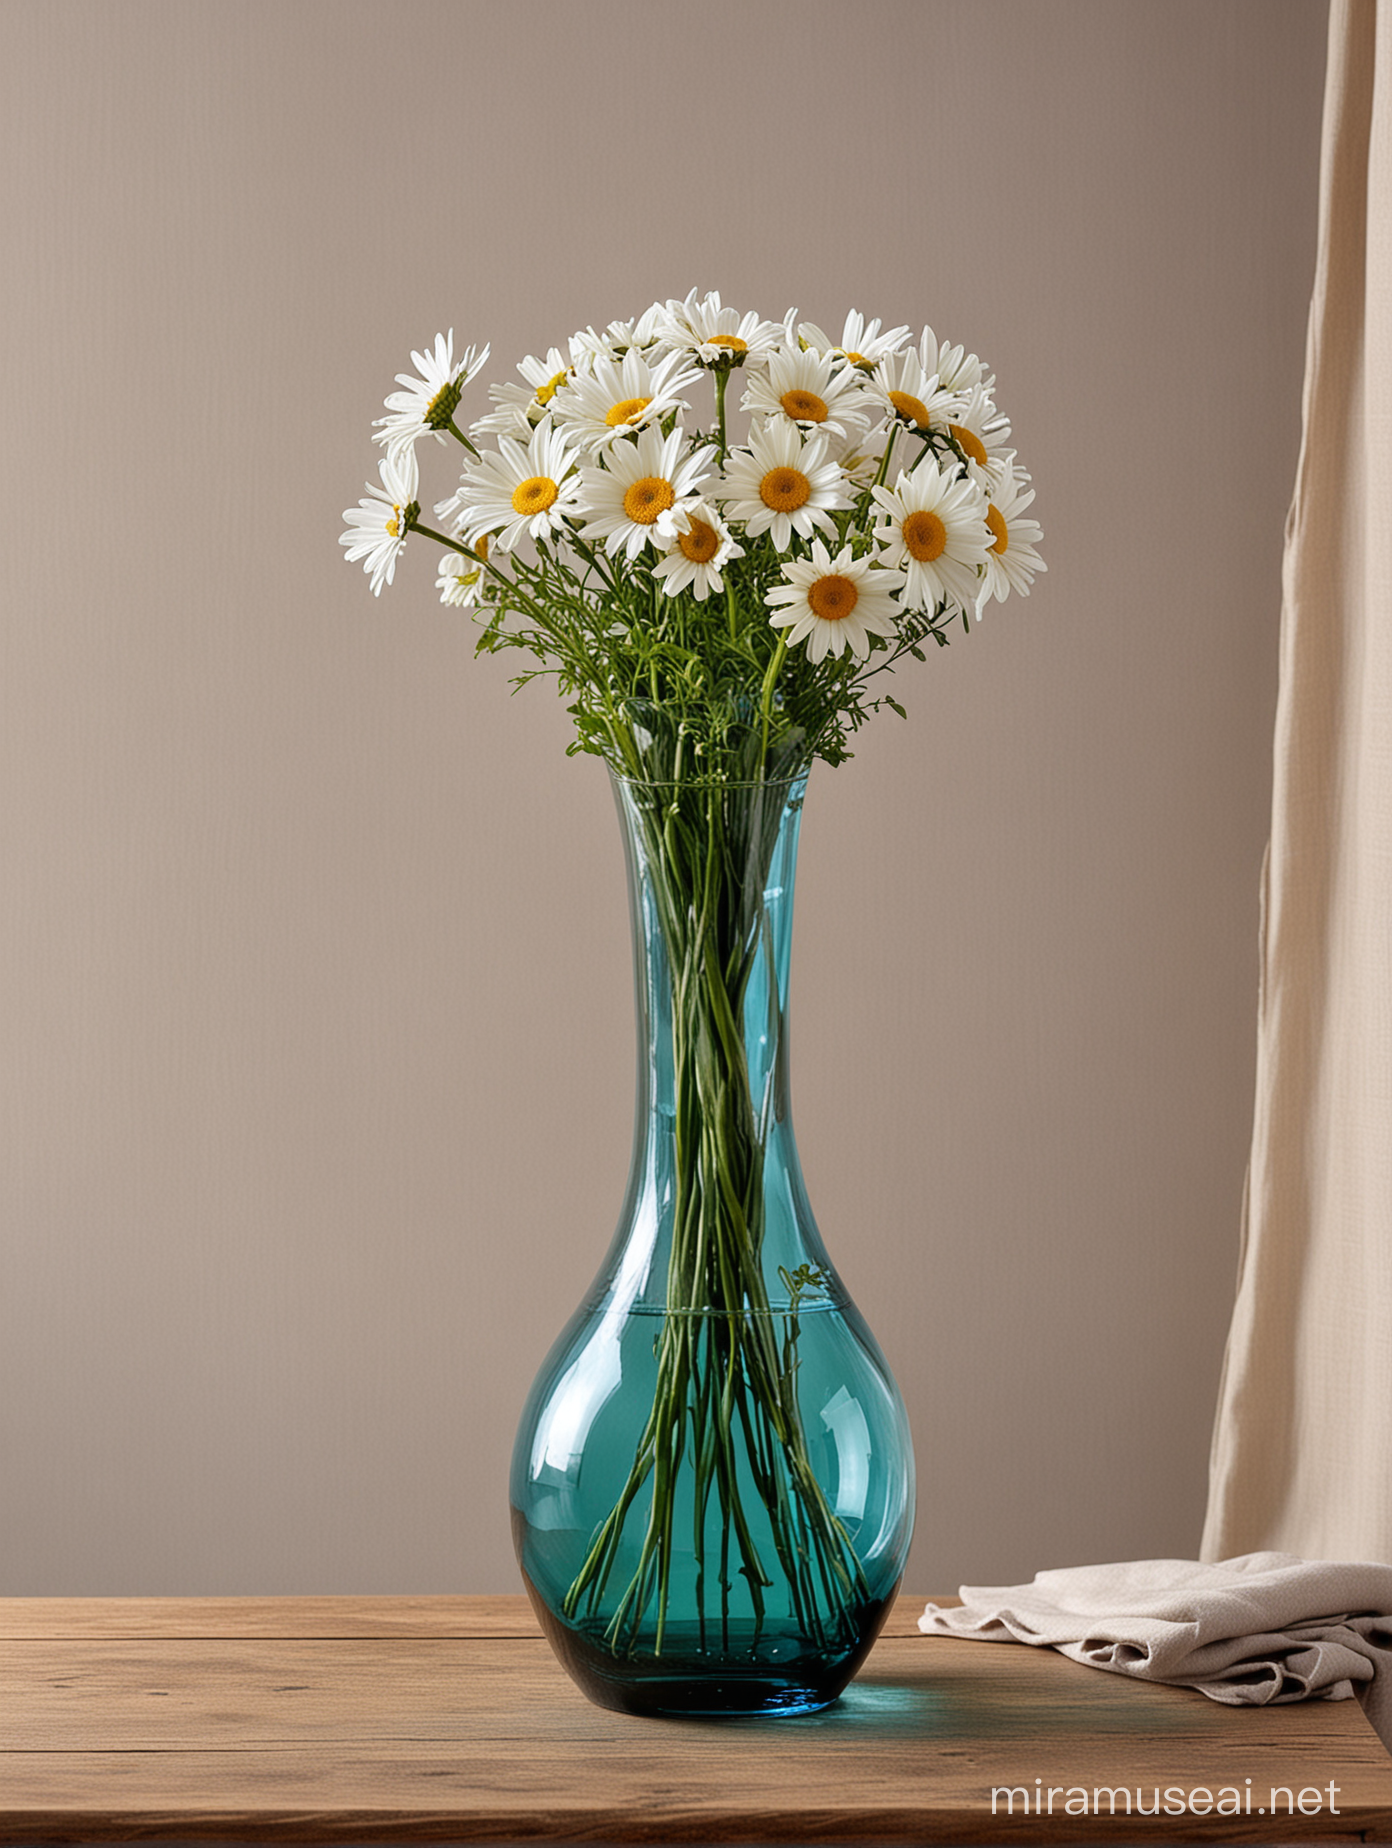 Vibrant MultiColored Daisy Bouquet in Stylish Decorative Glass Vase with Drapery